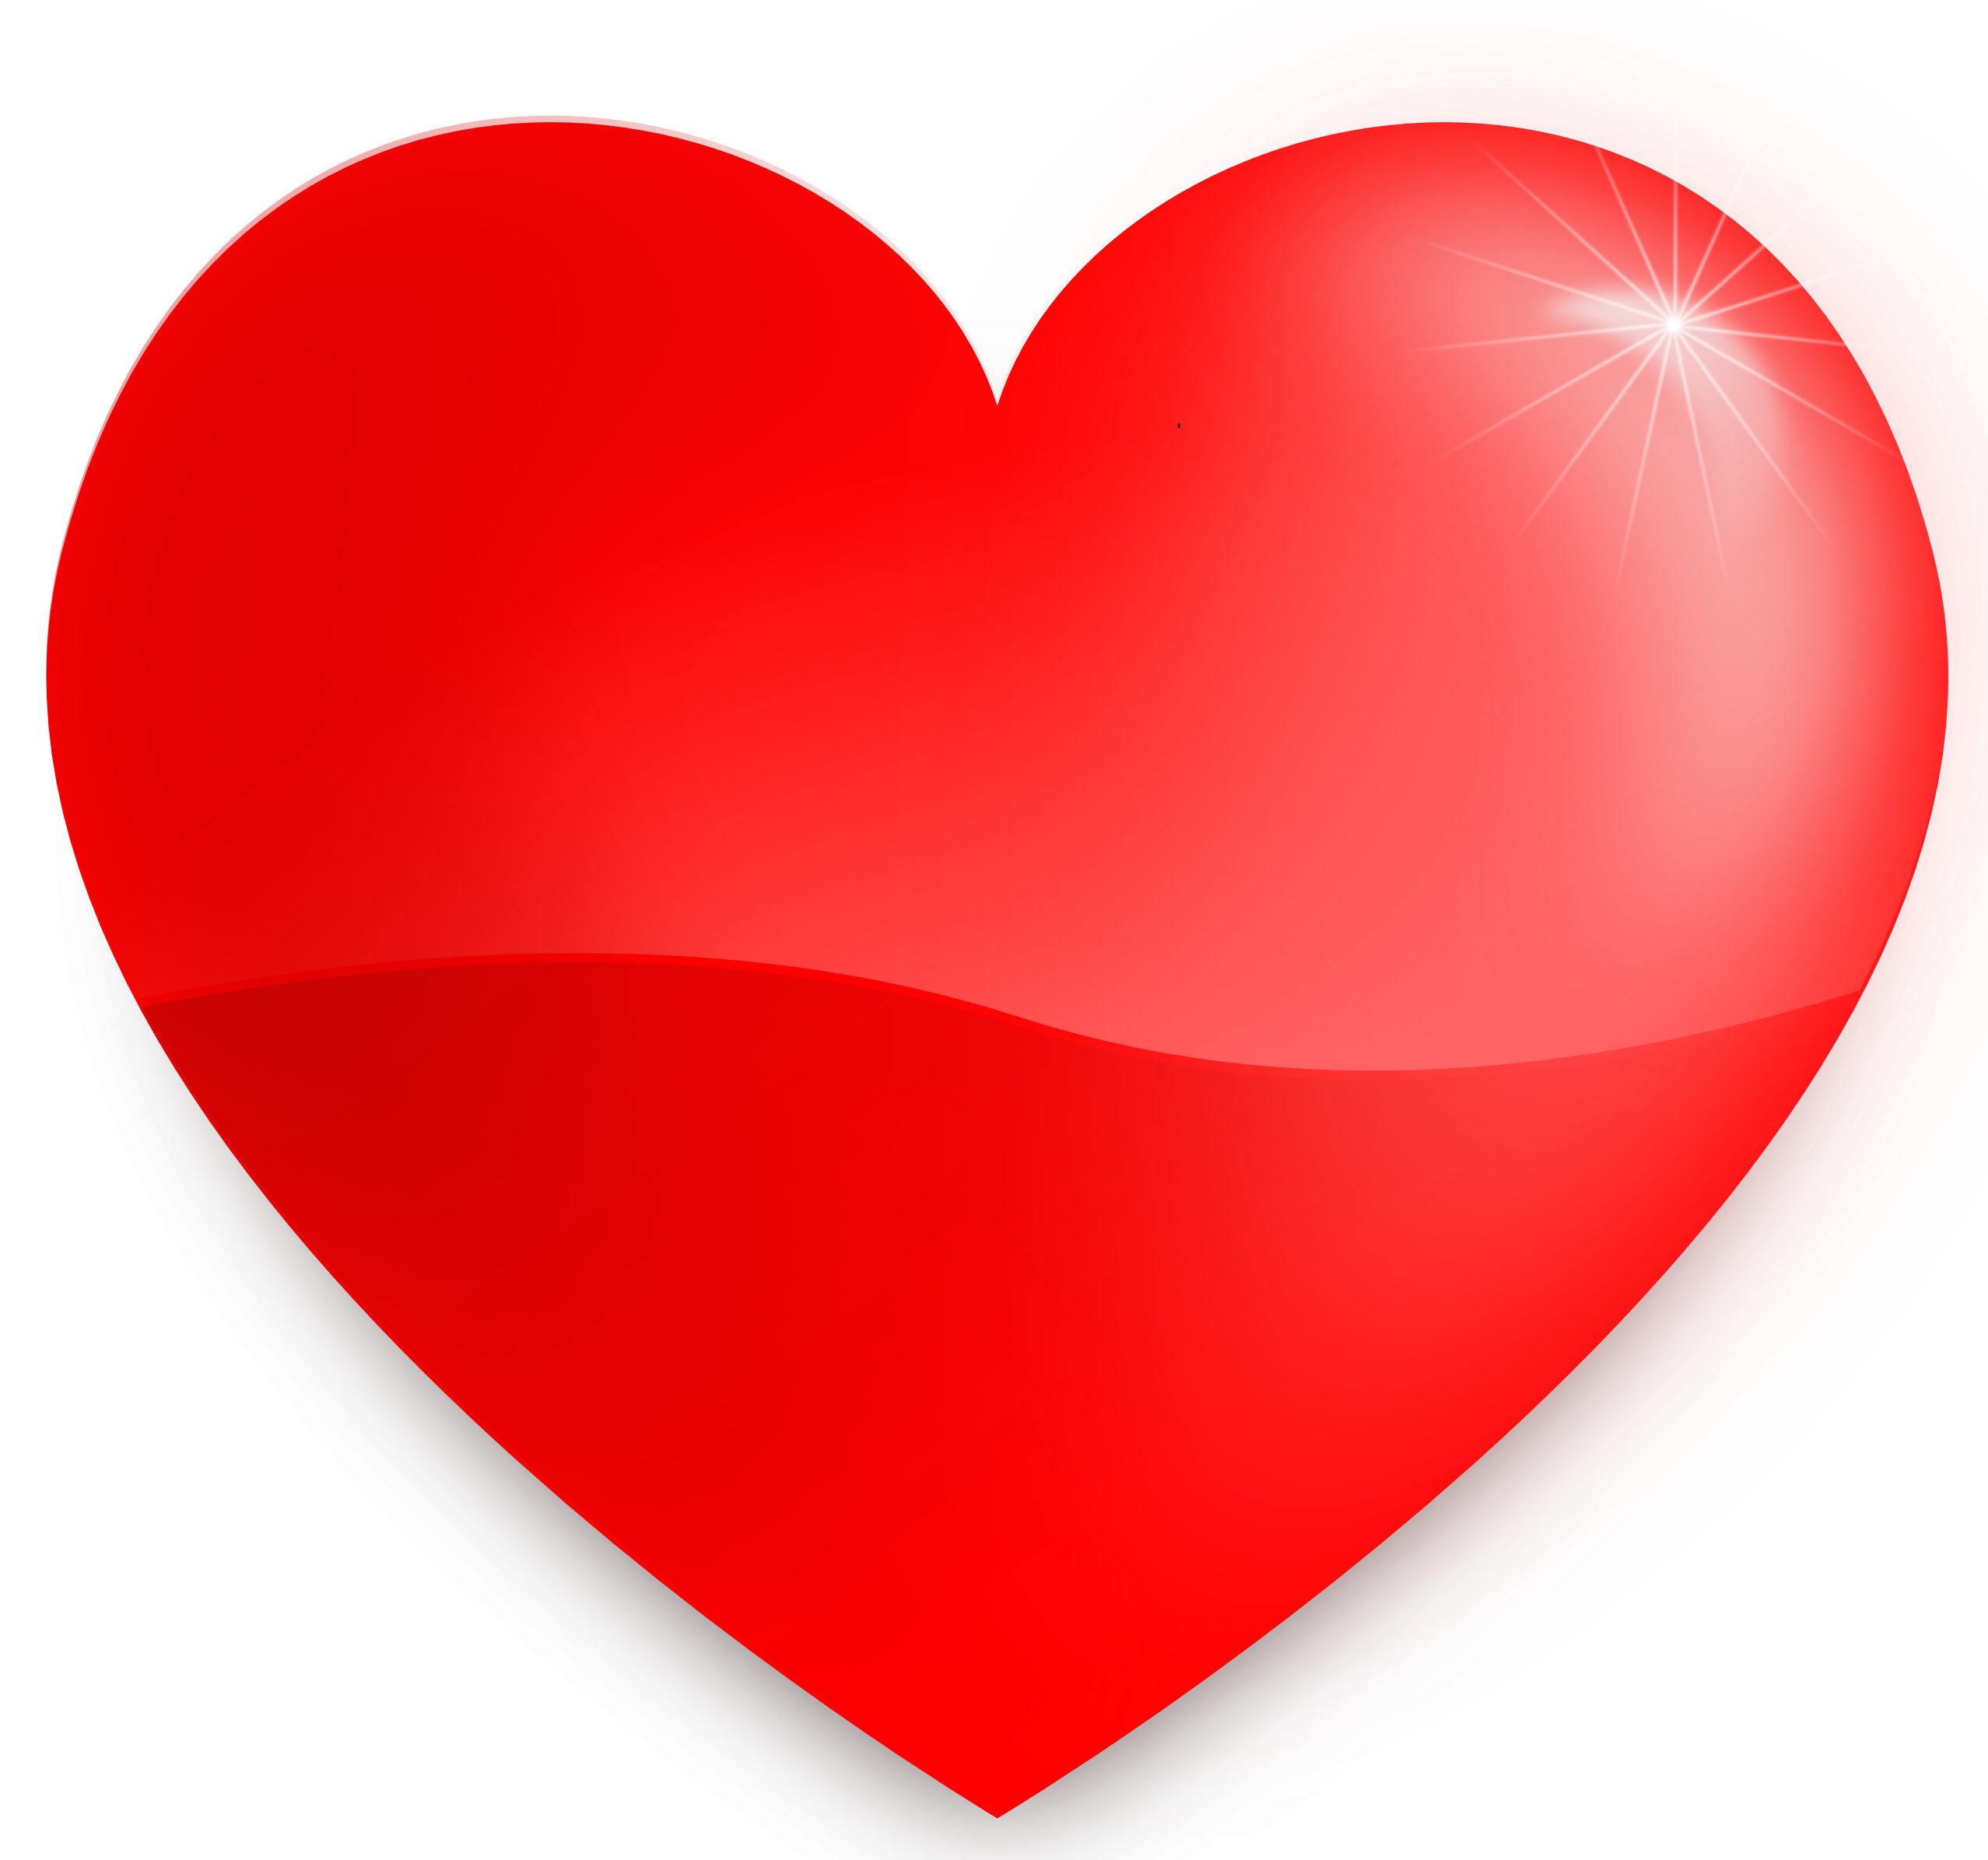 Twitter emoji kalp PNG arka plan Görüntüsü